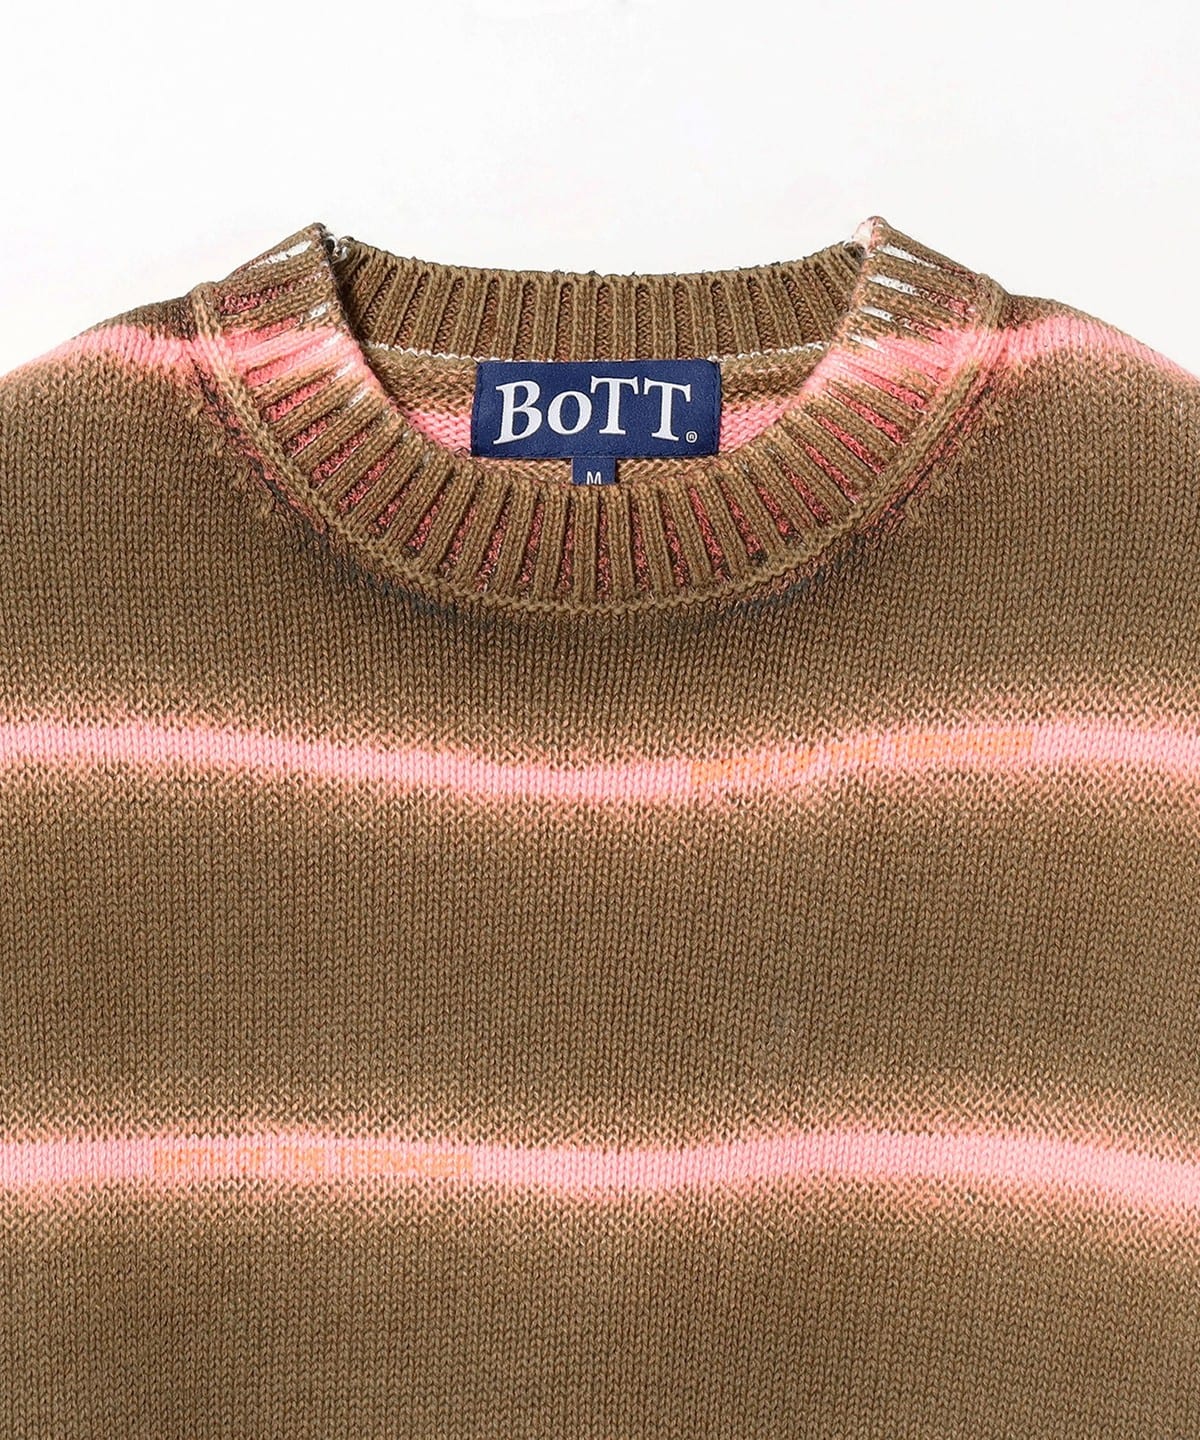 BOTT グラデーションセーター定価33000円です